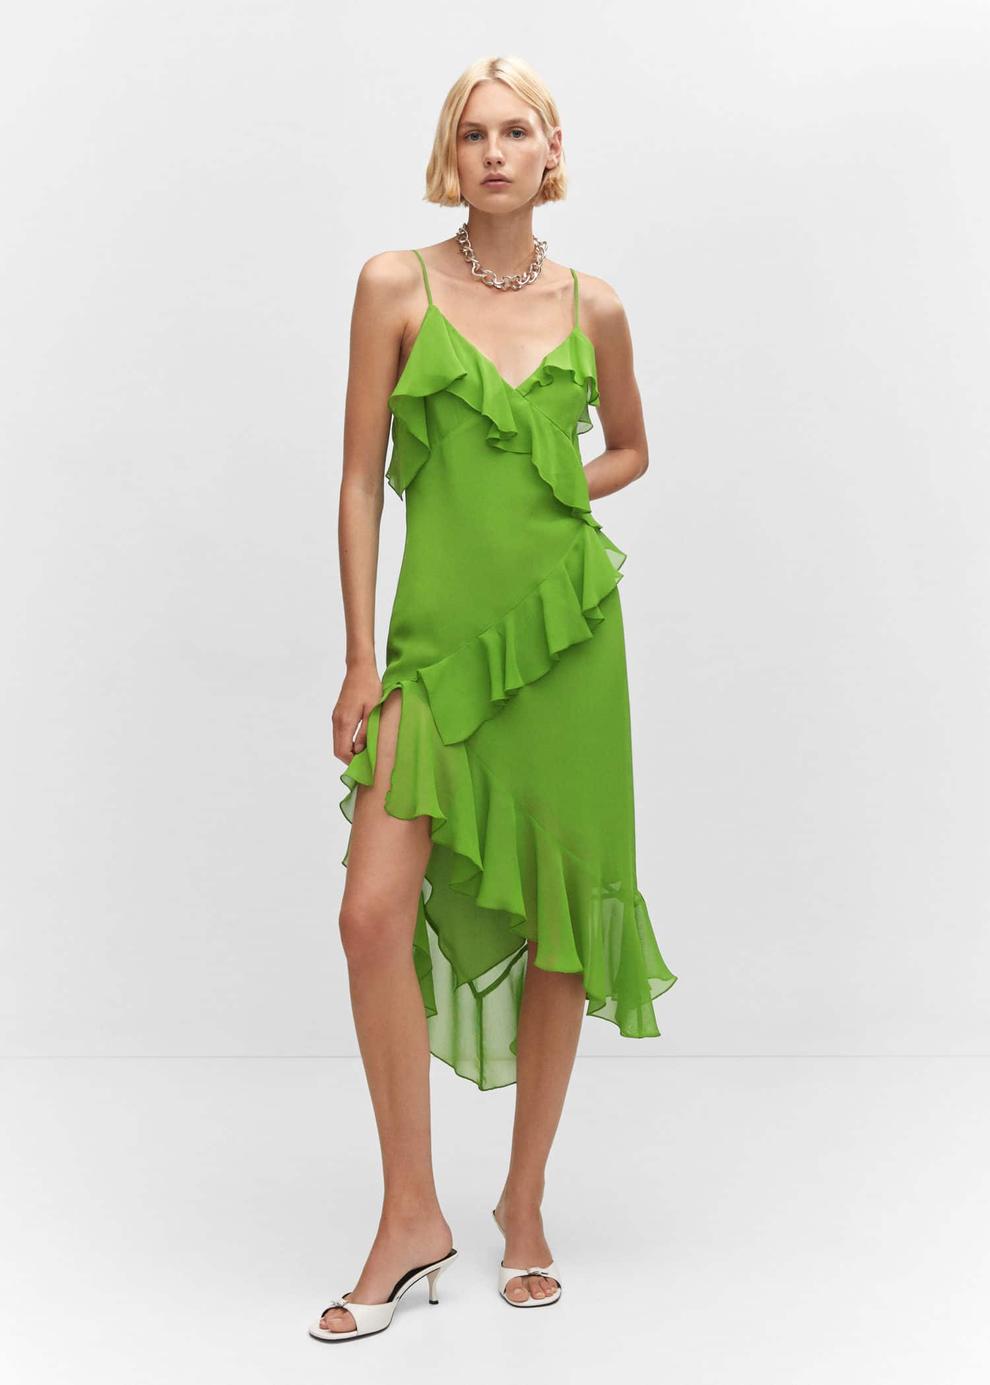 Asymmetric ruffled dress offers at $79.99 in Mango